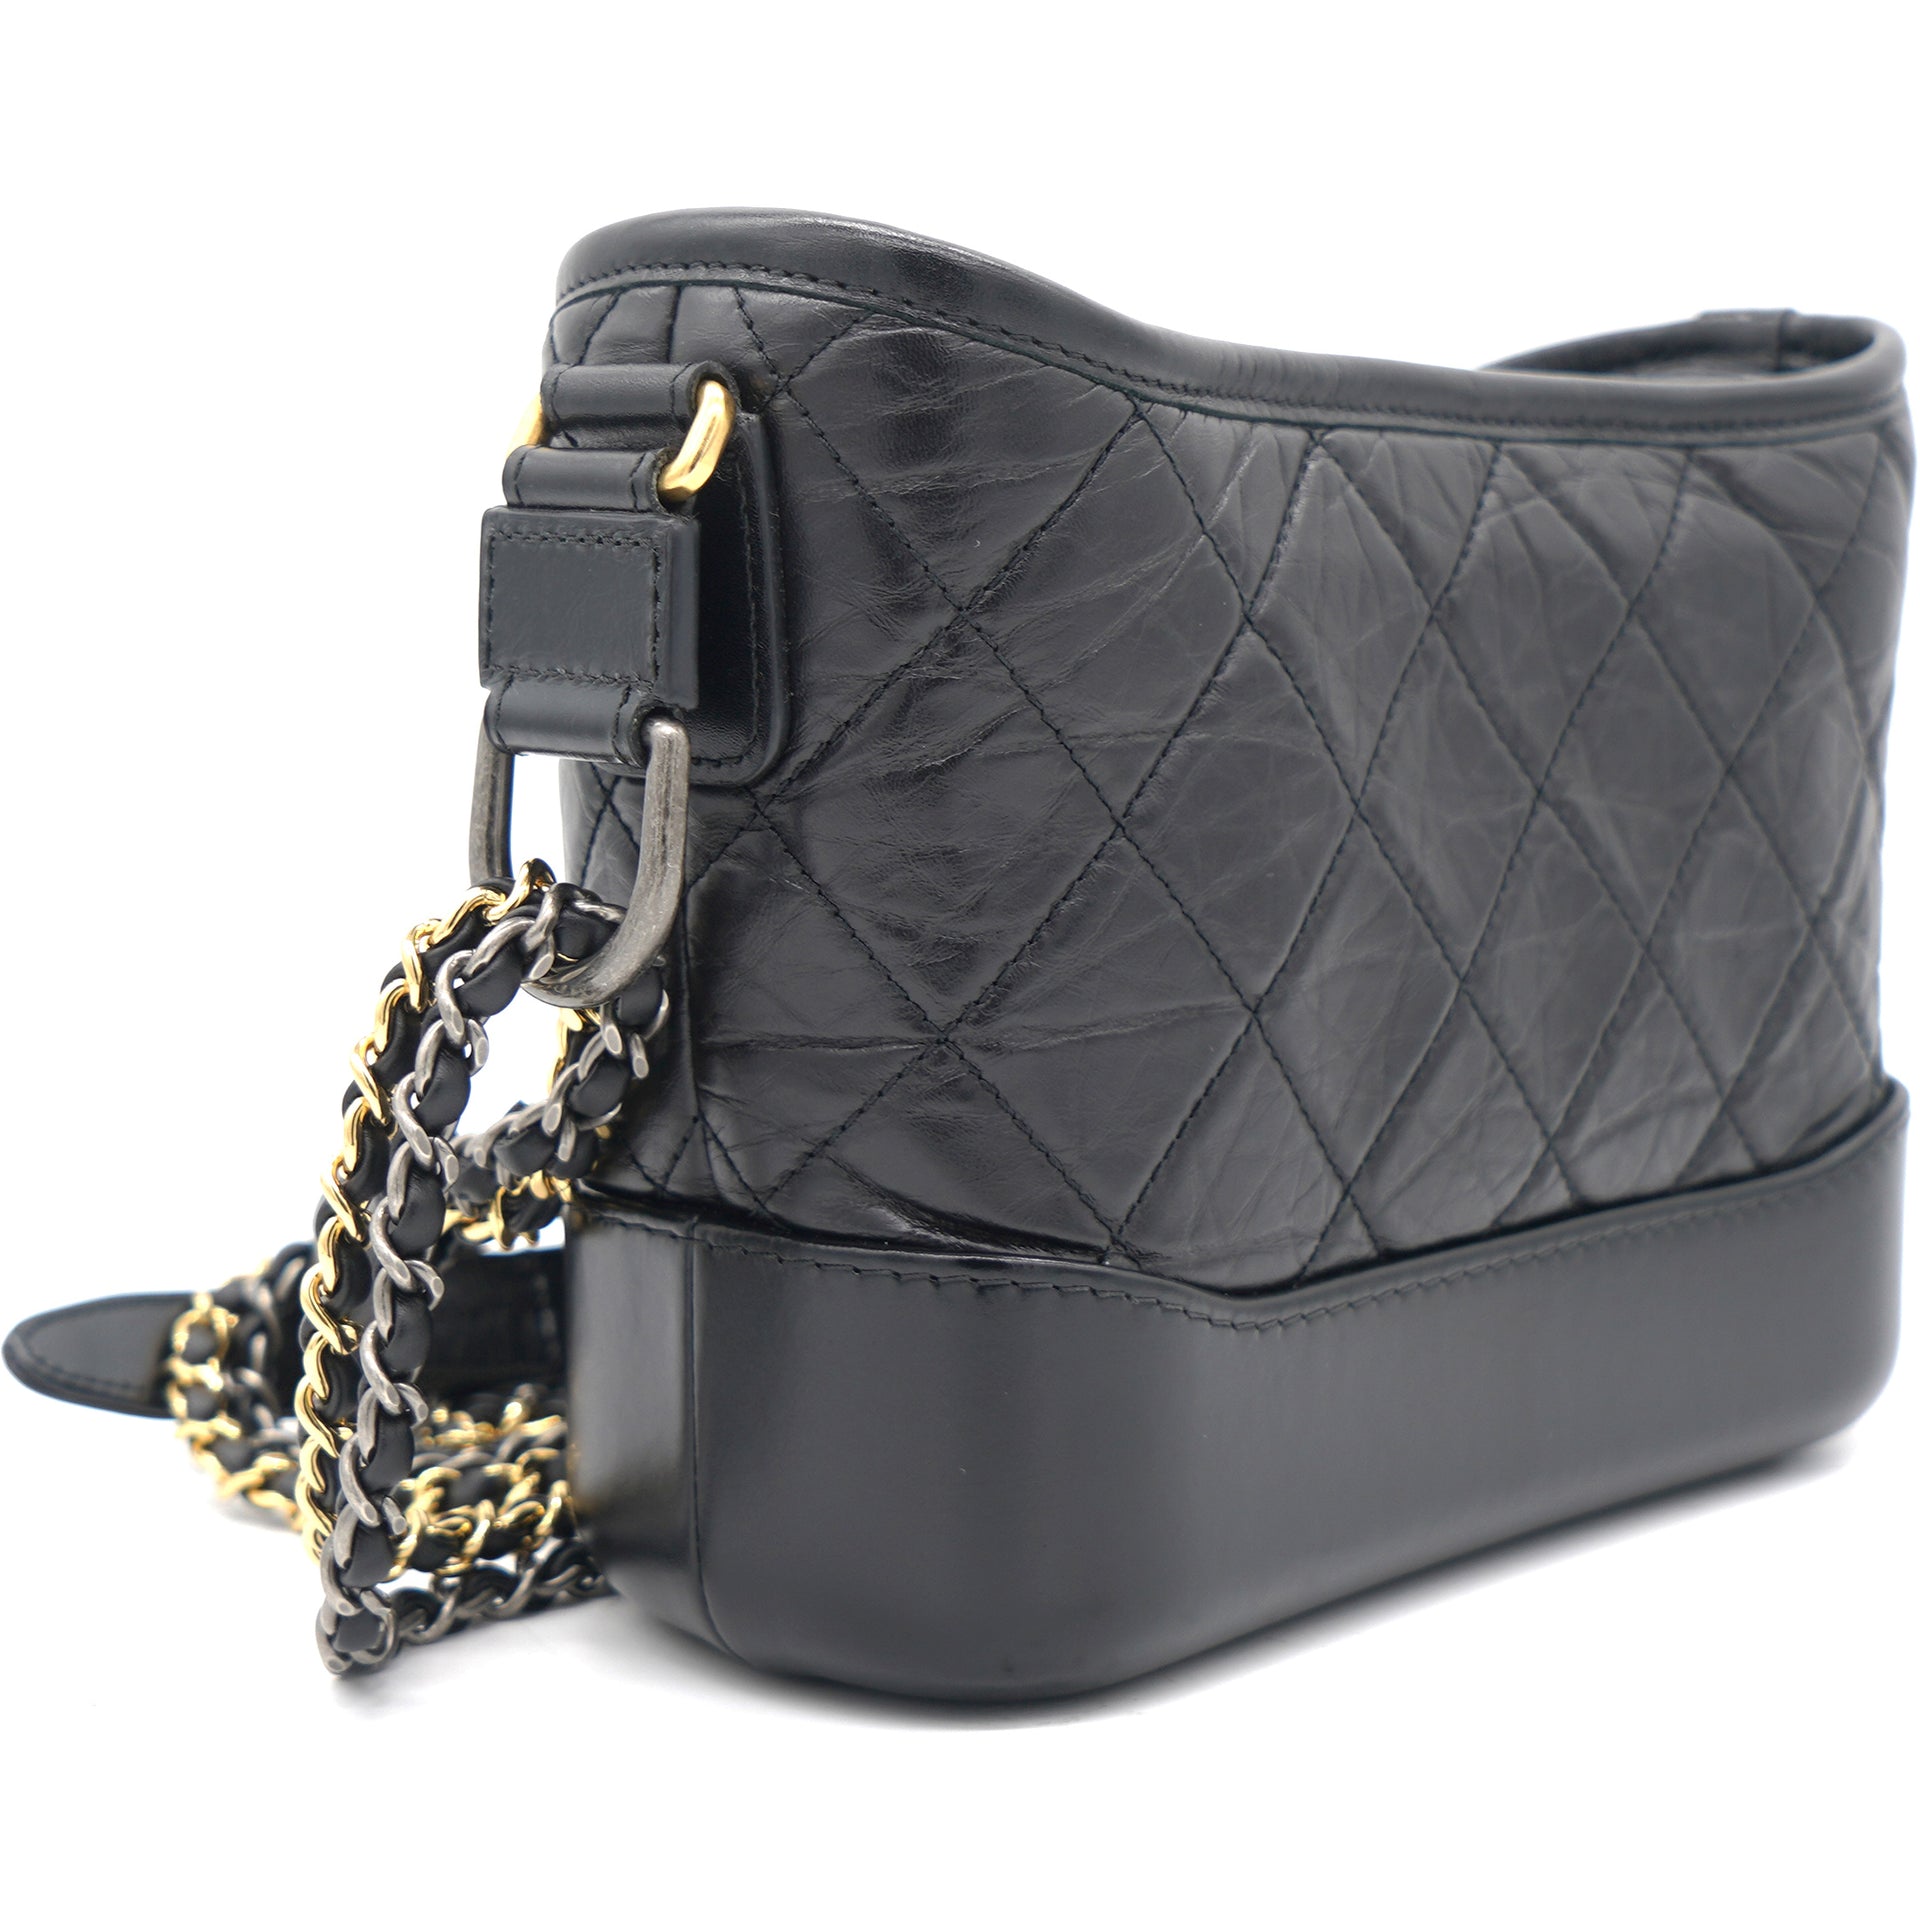 Chanel Black/Peach Tweed and Leather Medium Gabrielle Hobo Bag